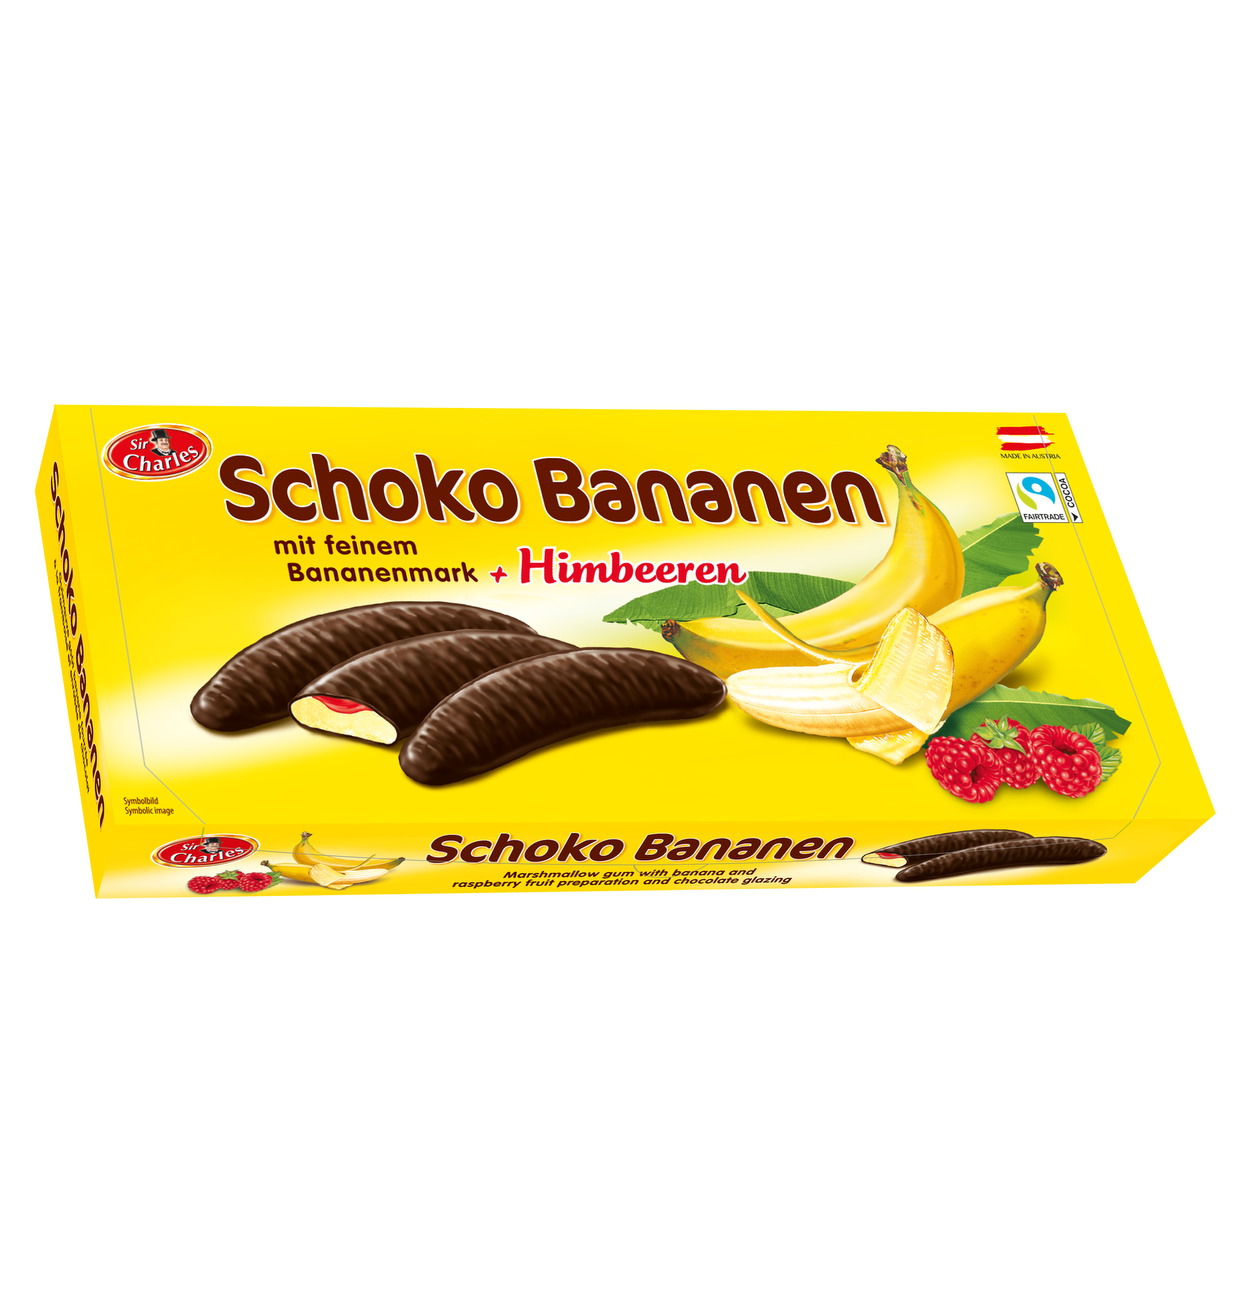 Schoko Bananen raspberry Sir Charles (15 x 300g)